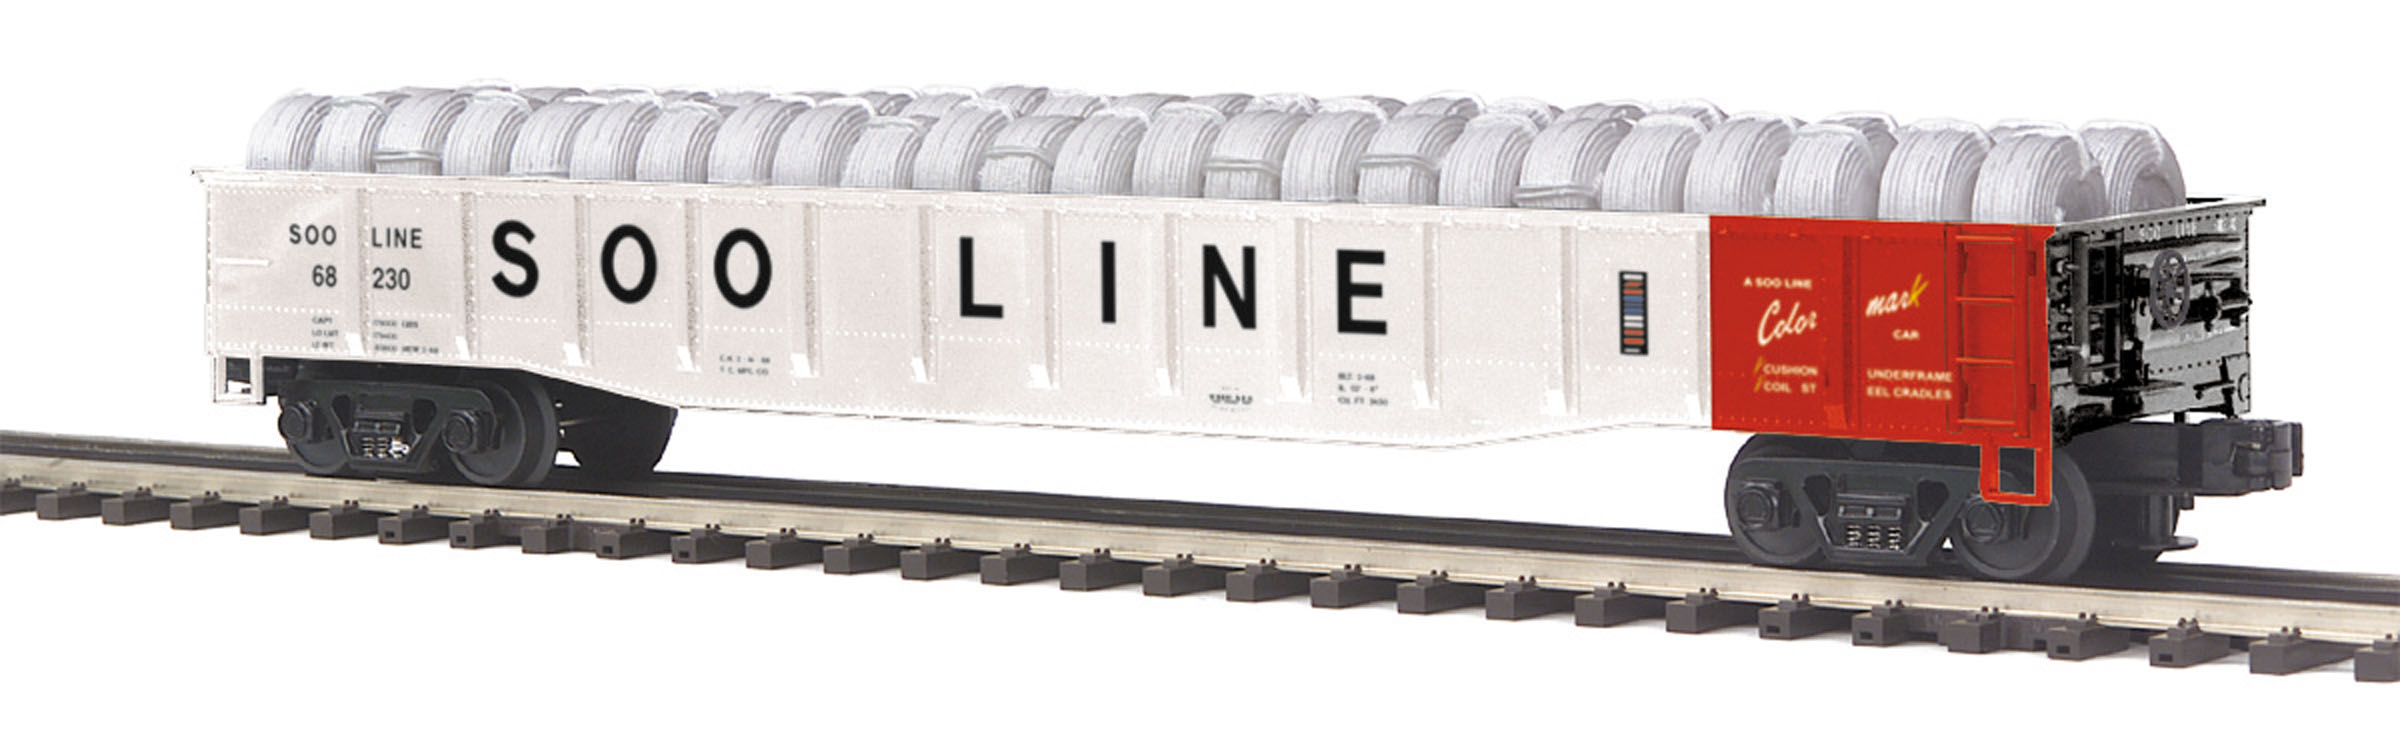 SOO Line Gondola Car w/Coiled Wire Load image